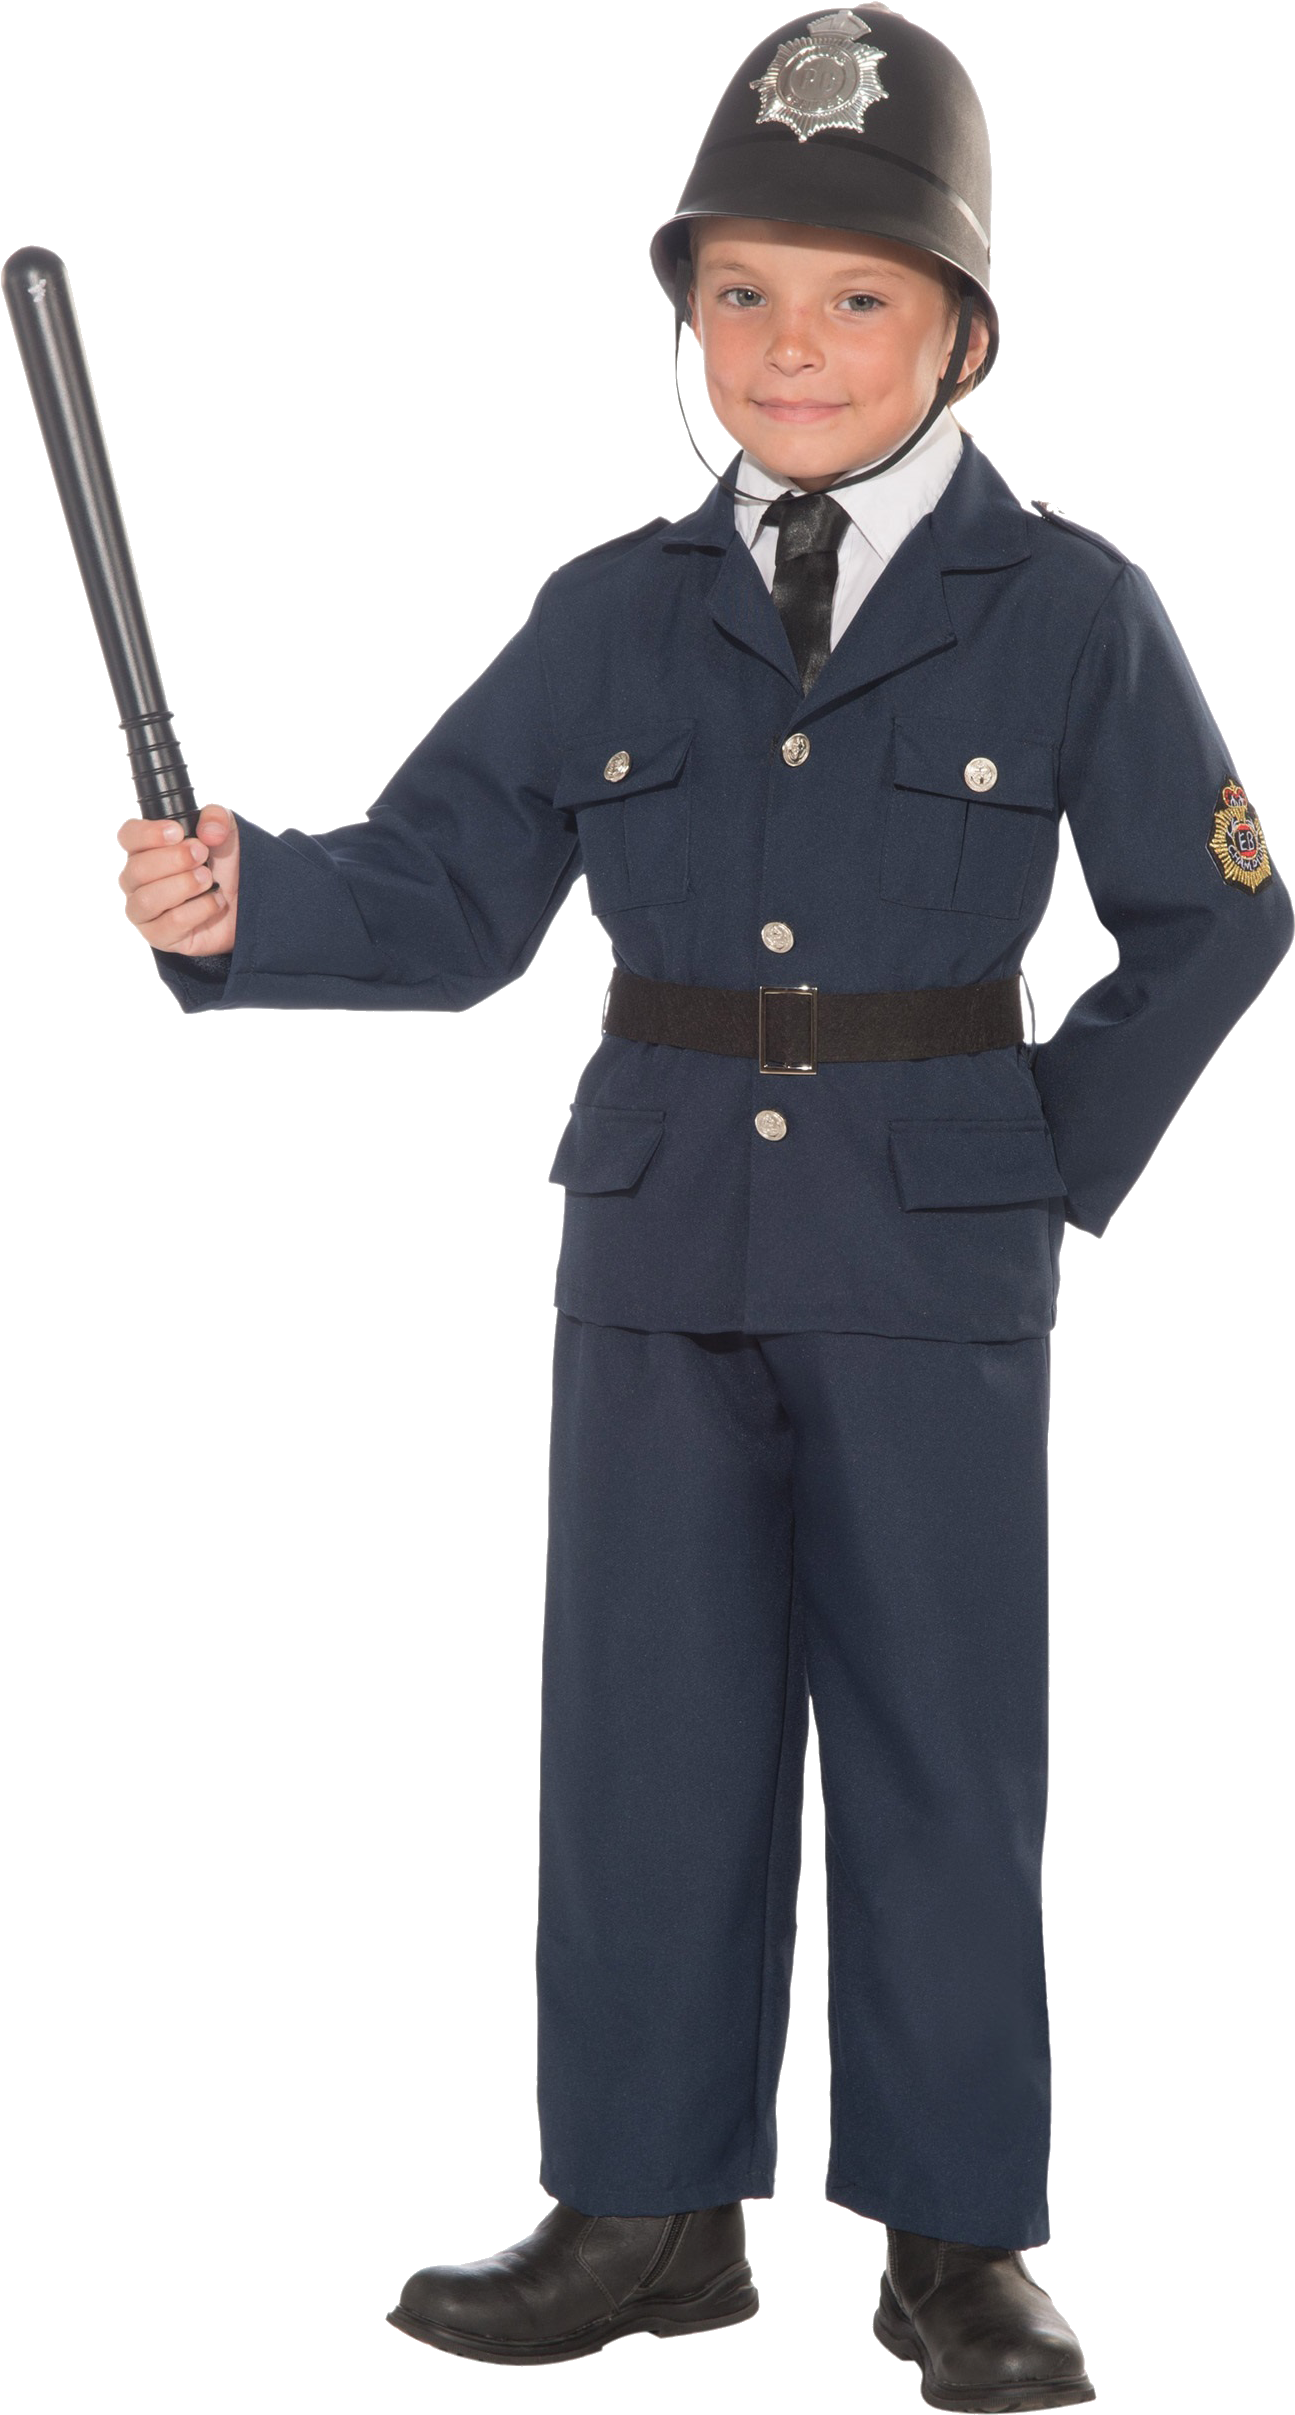 A Person In A Police Uniform